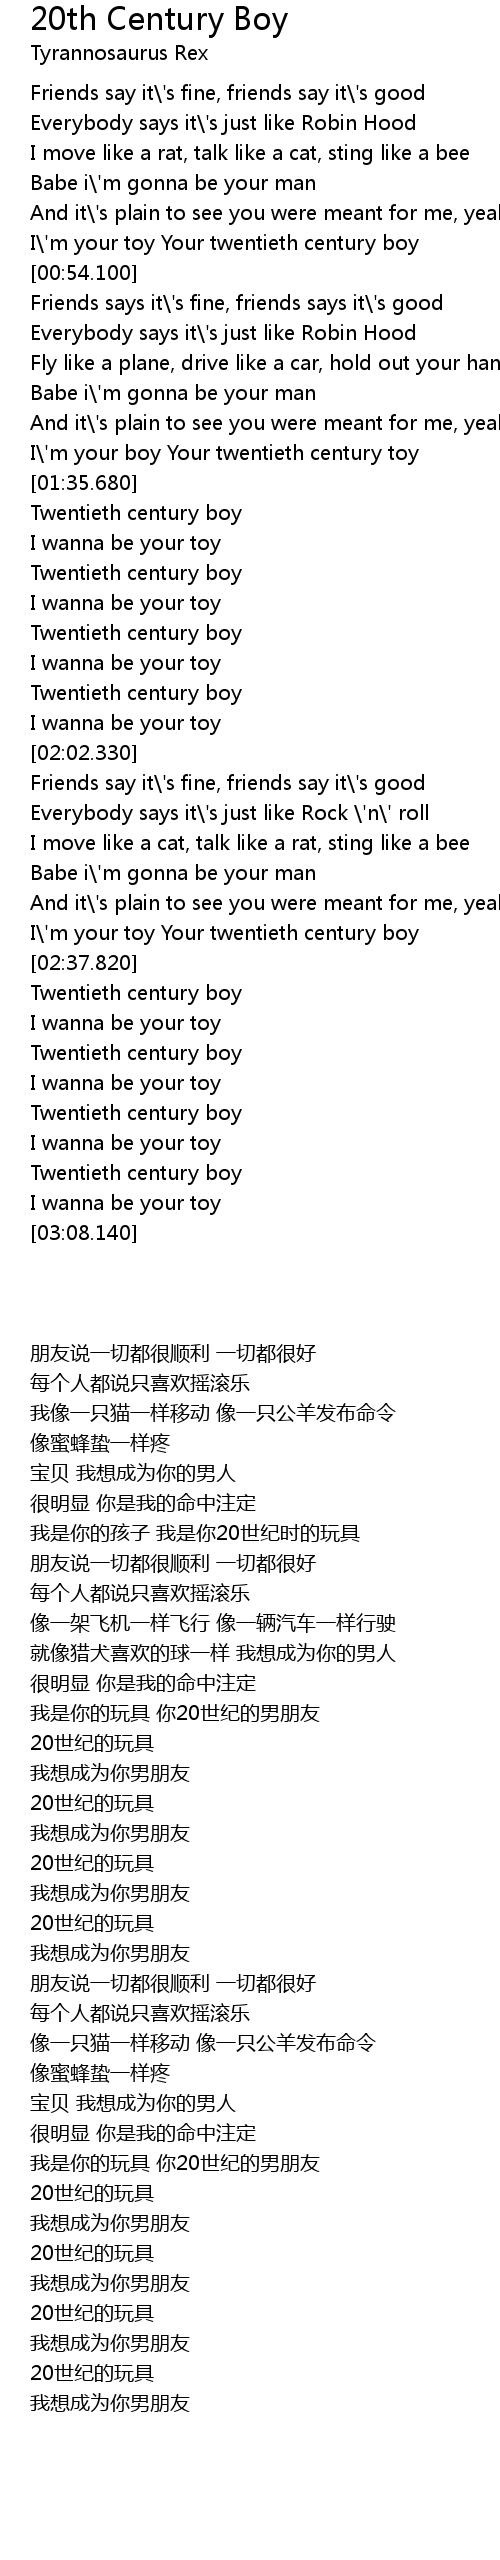 th Century Boy Lyrics Follow Lyrics